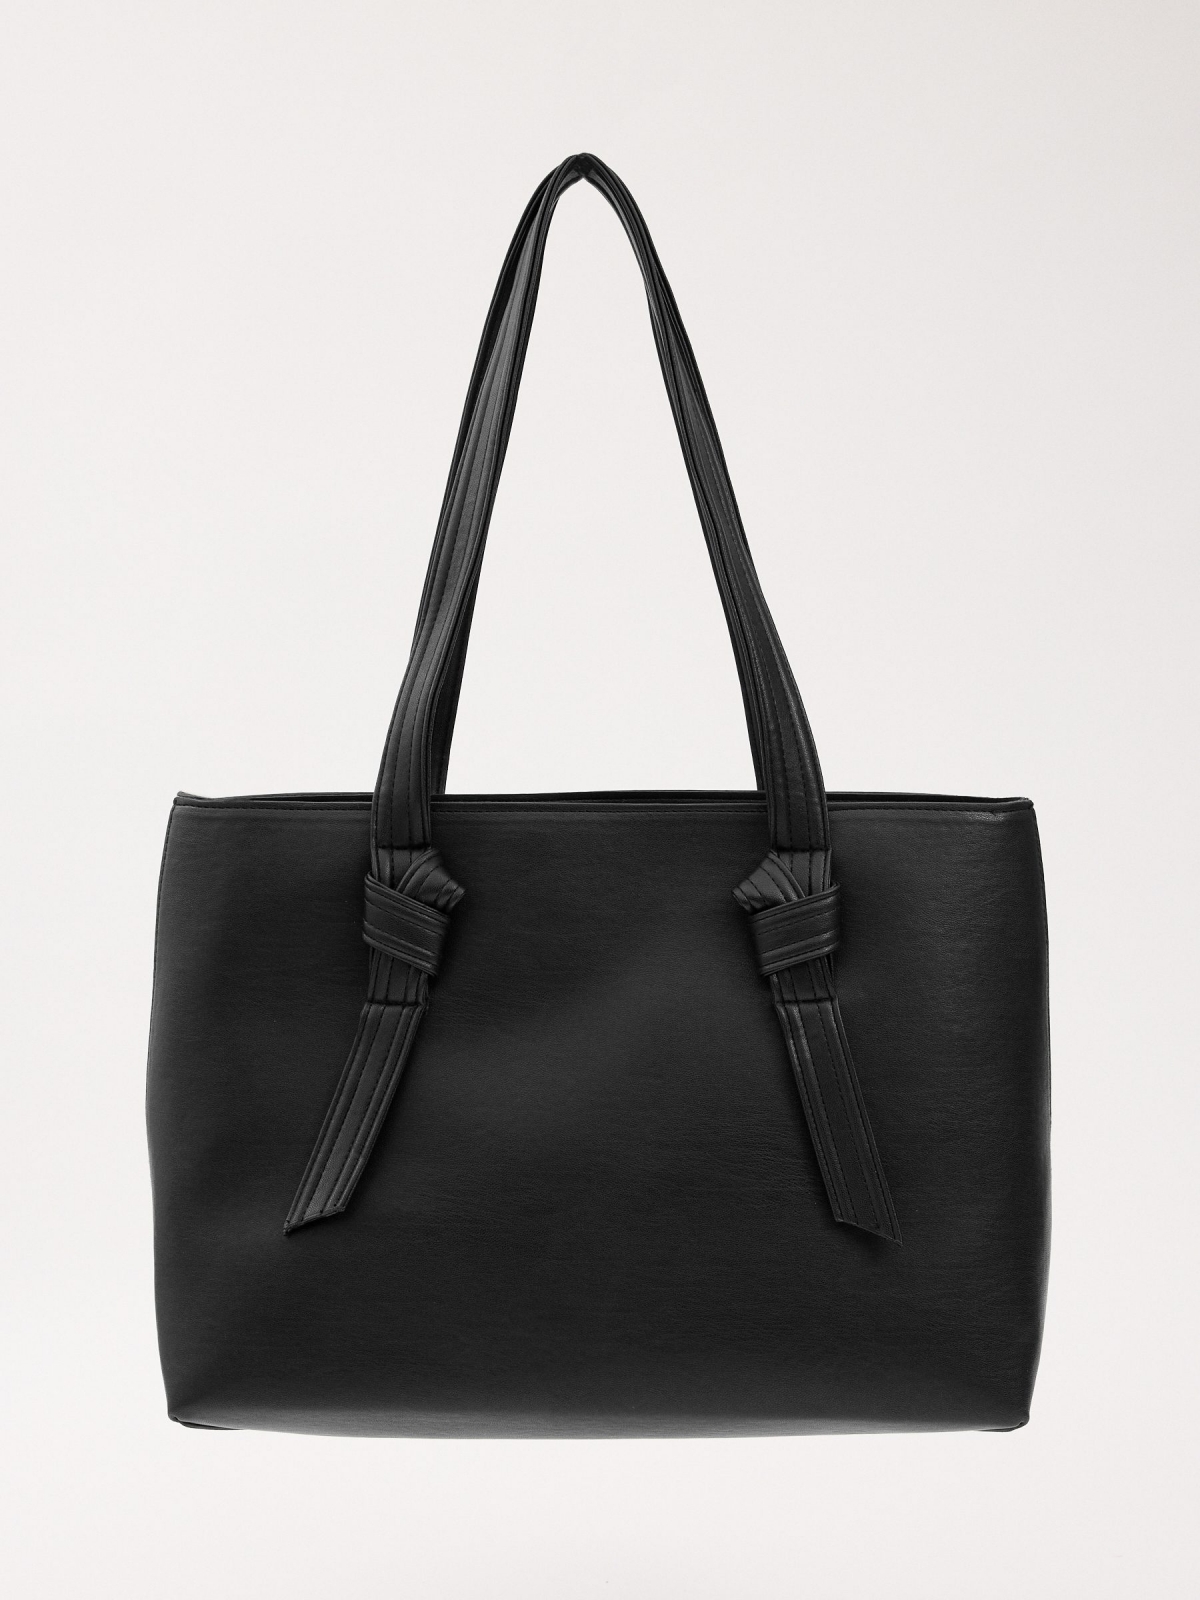 Black tote bag black